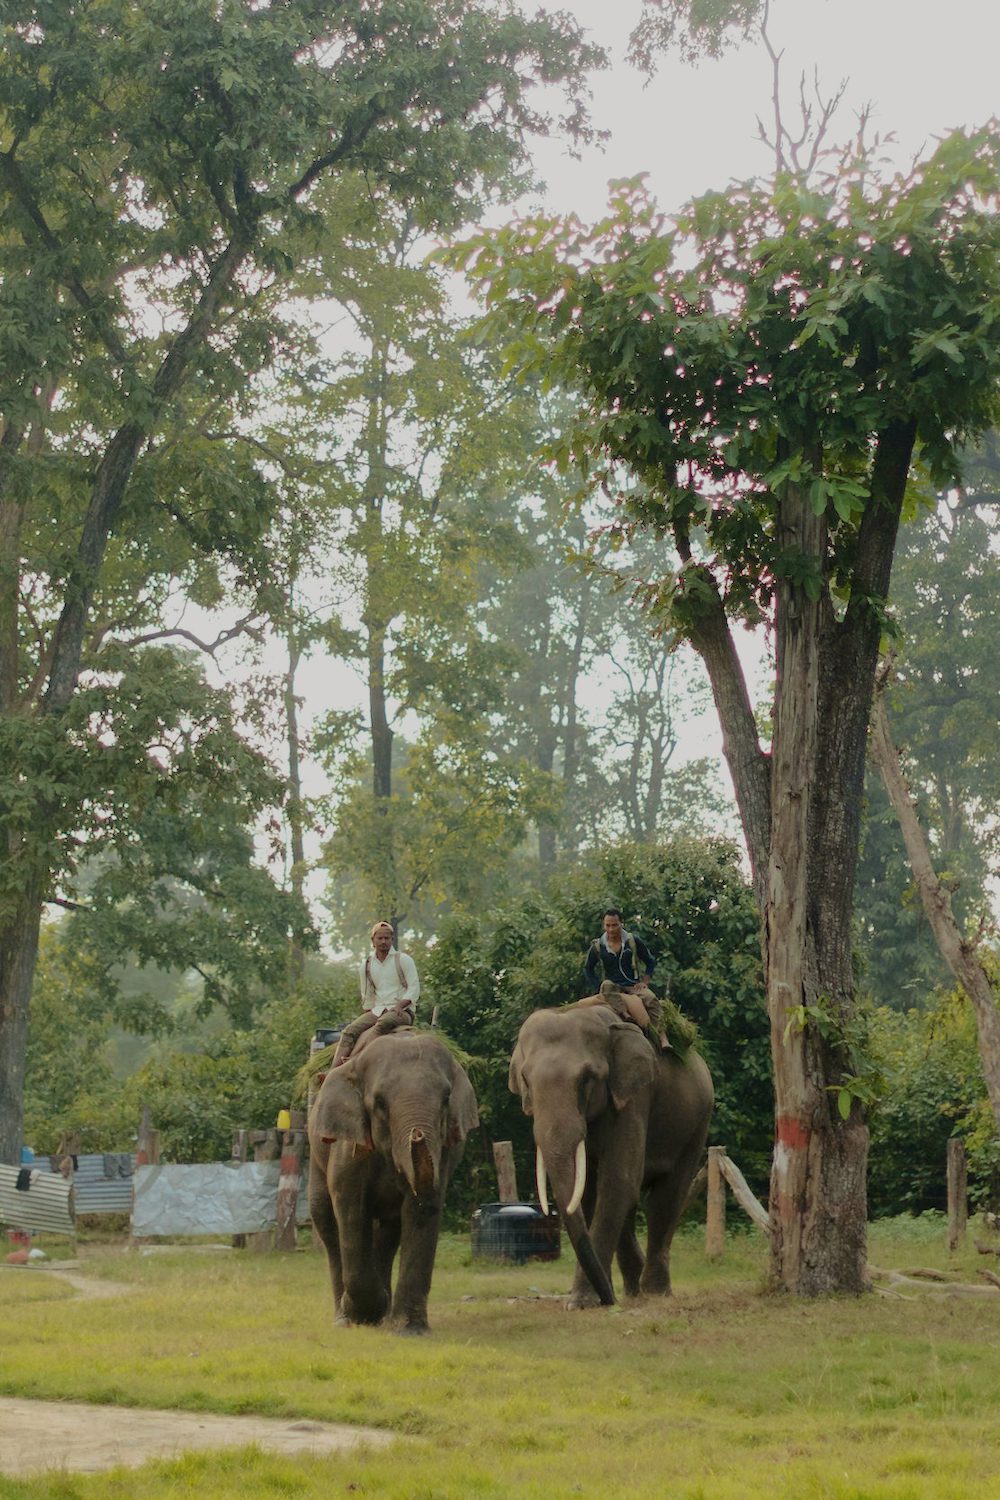 Mahouts, or elephant riders, guide elephants Samir and Ganesh inside Banke National Park. Photo by Joe Tobiason.